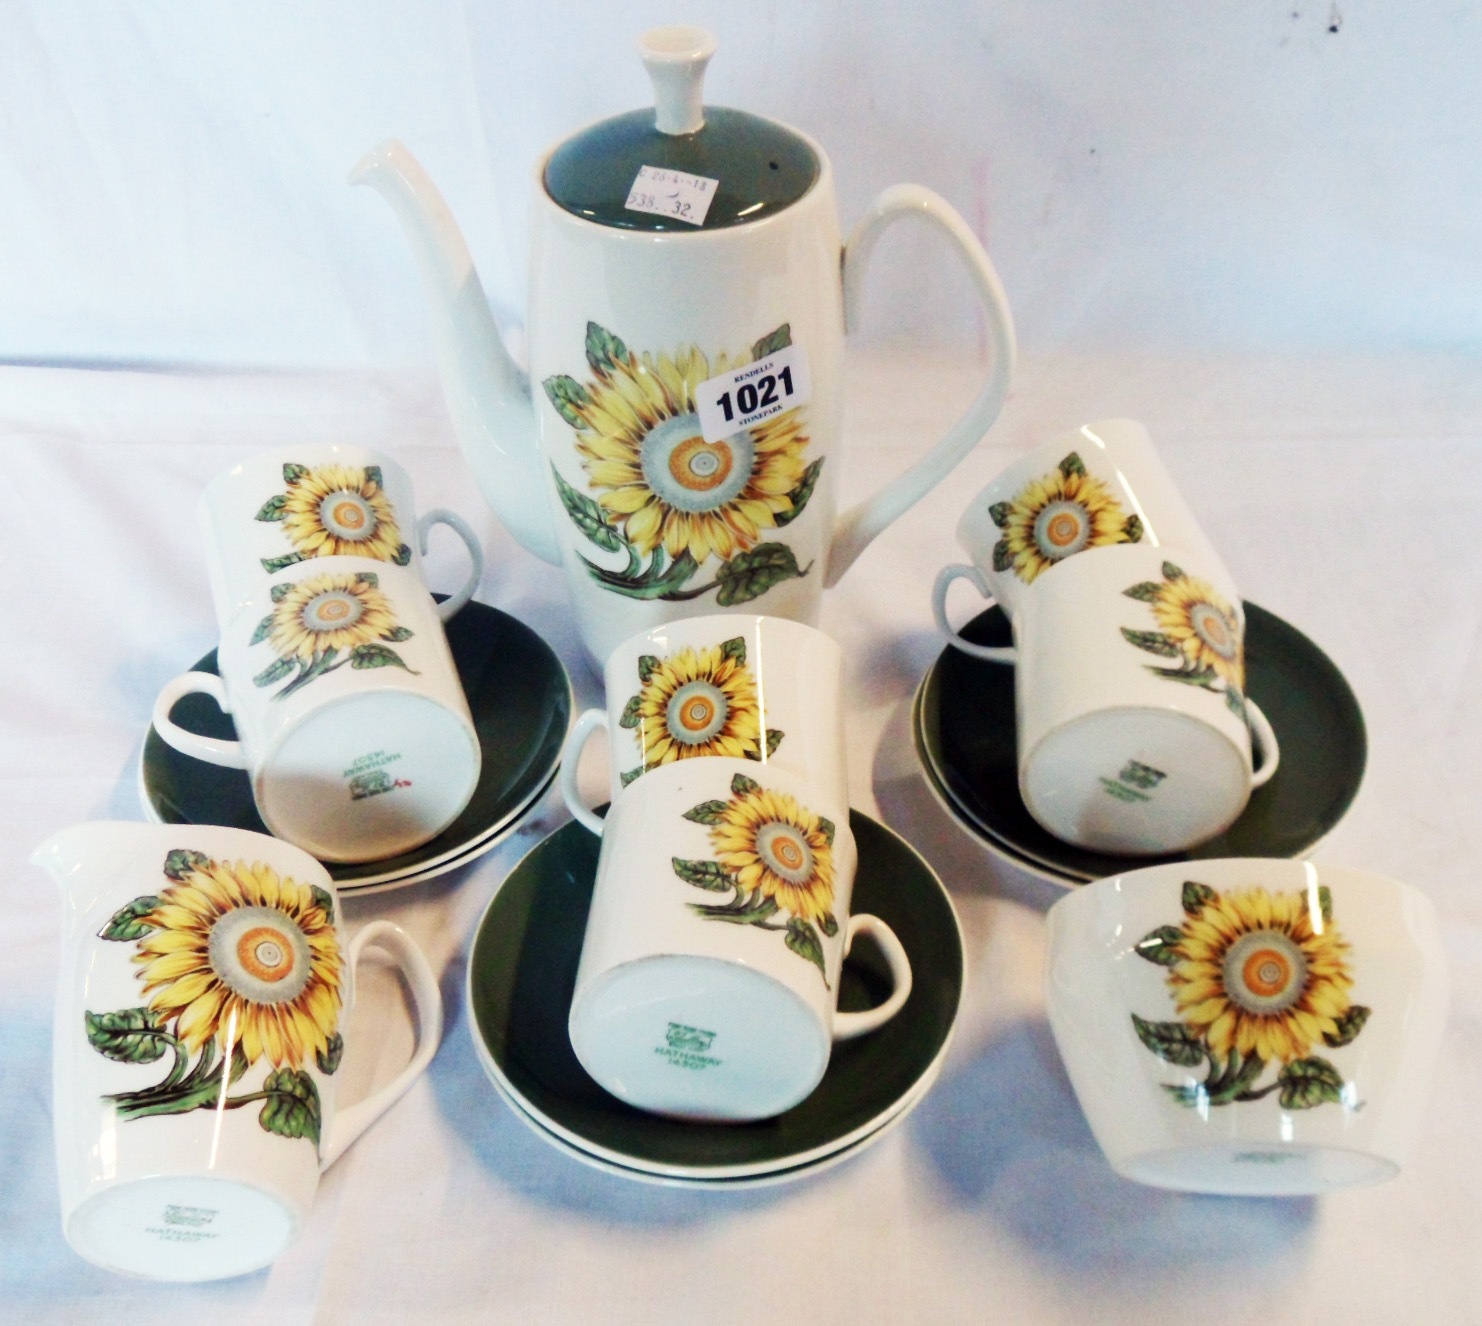 A Shelley Hathaway pattern coffee set including coffee pot, milk jug and sugar bowl